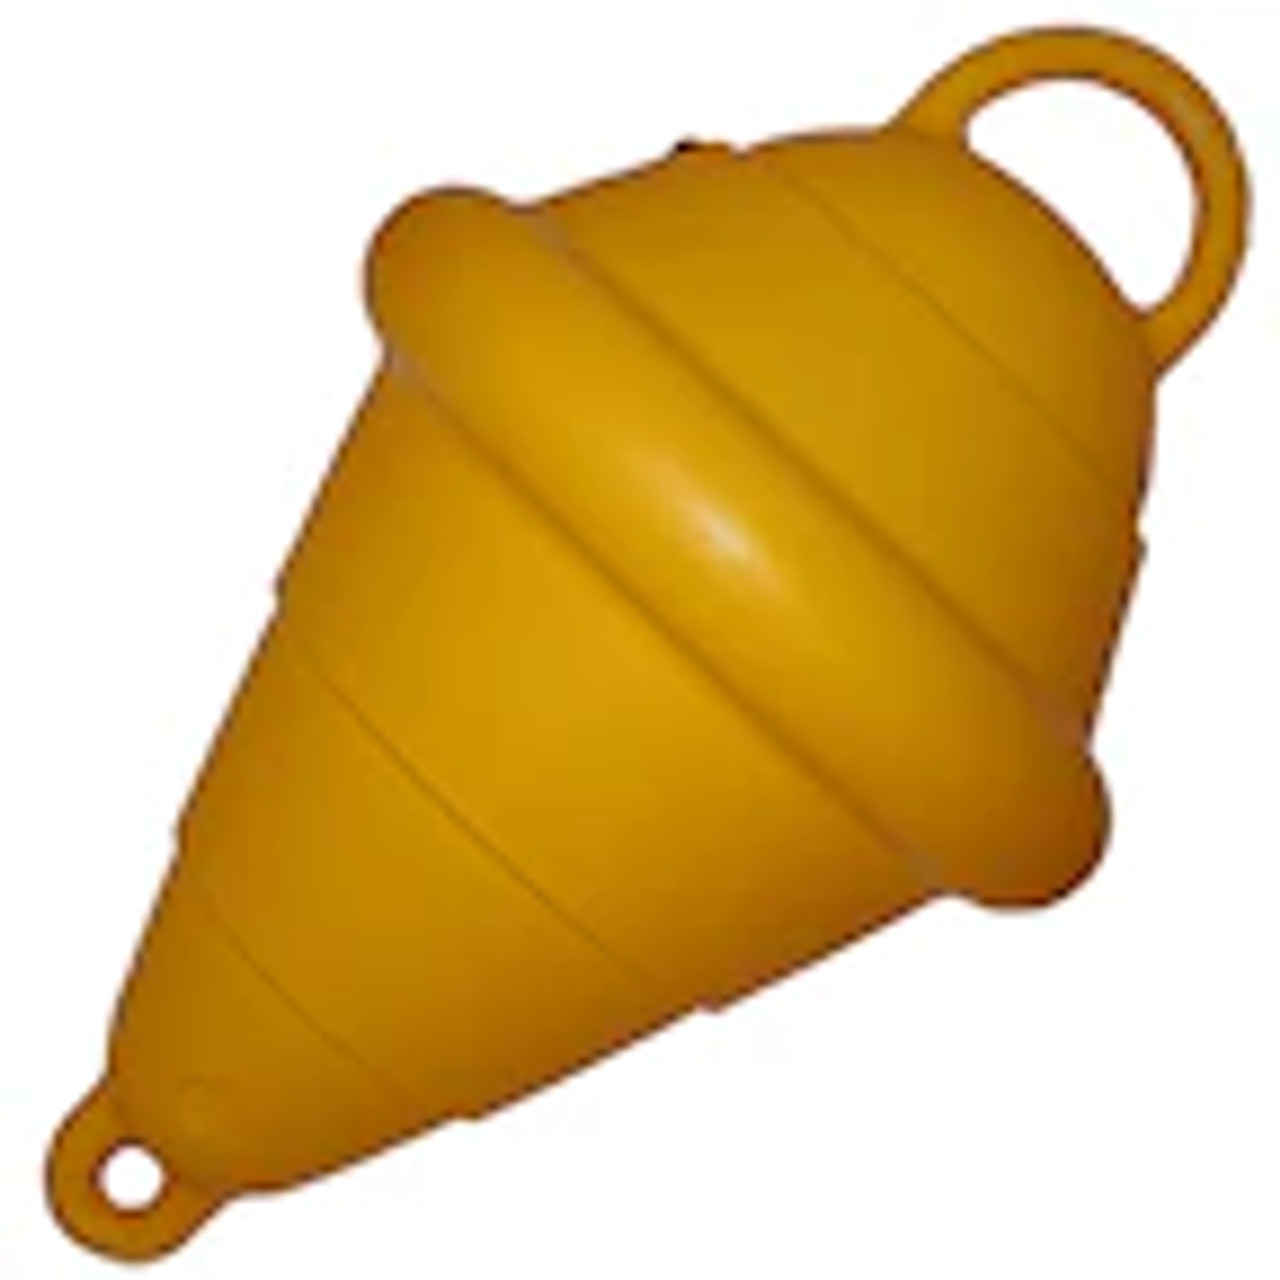 Mooring buoy 15" large yellow